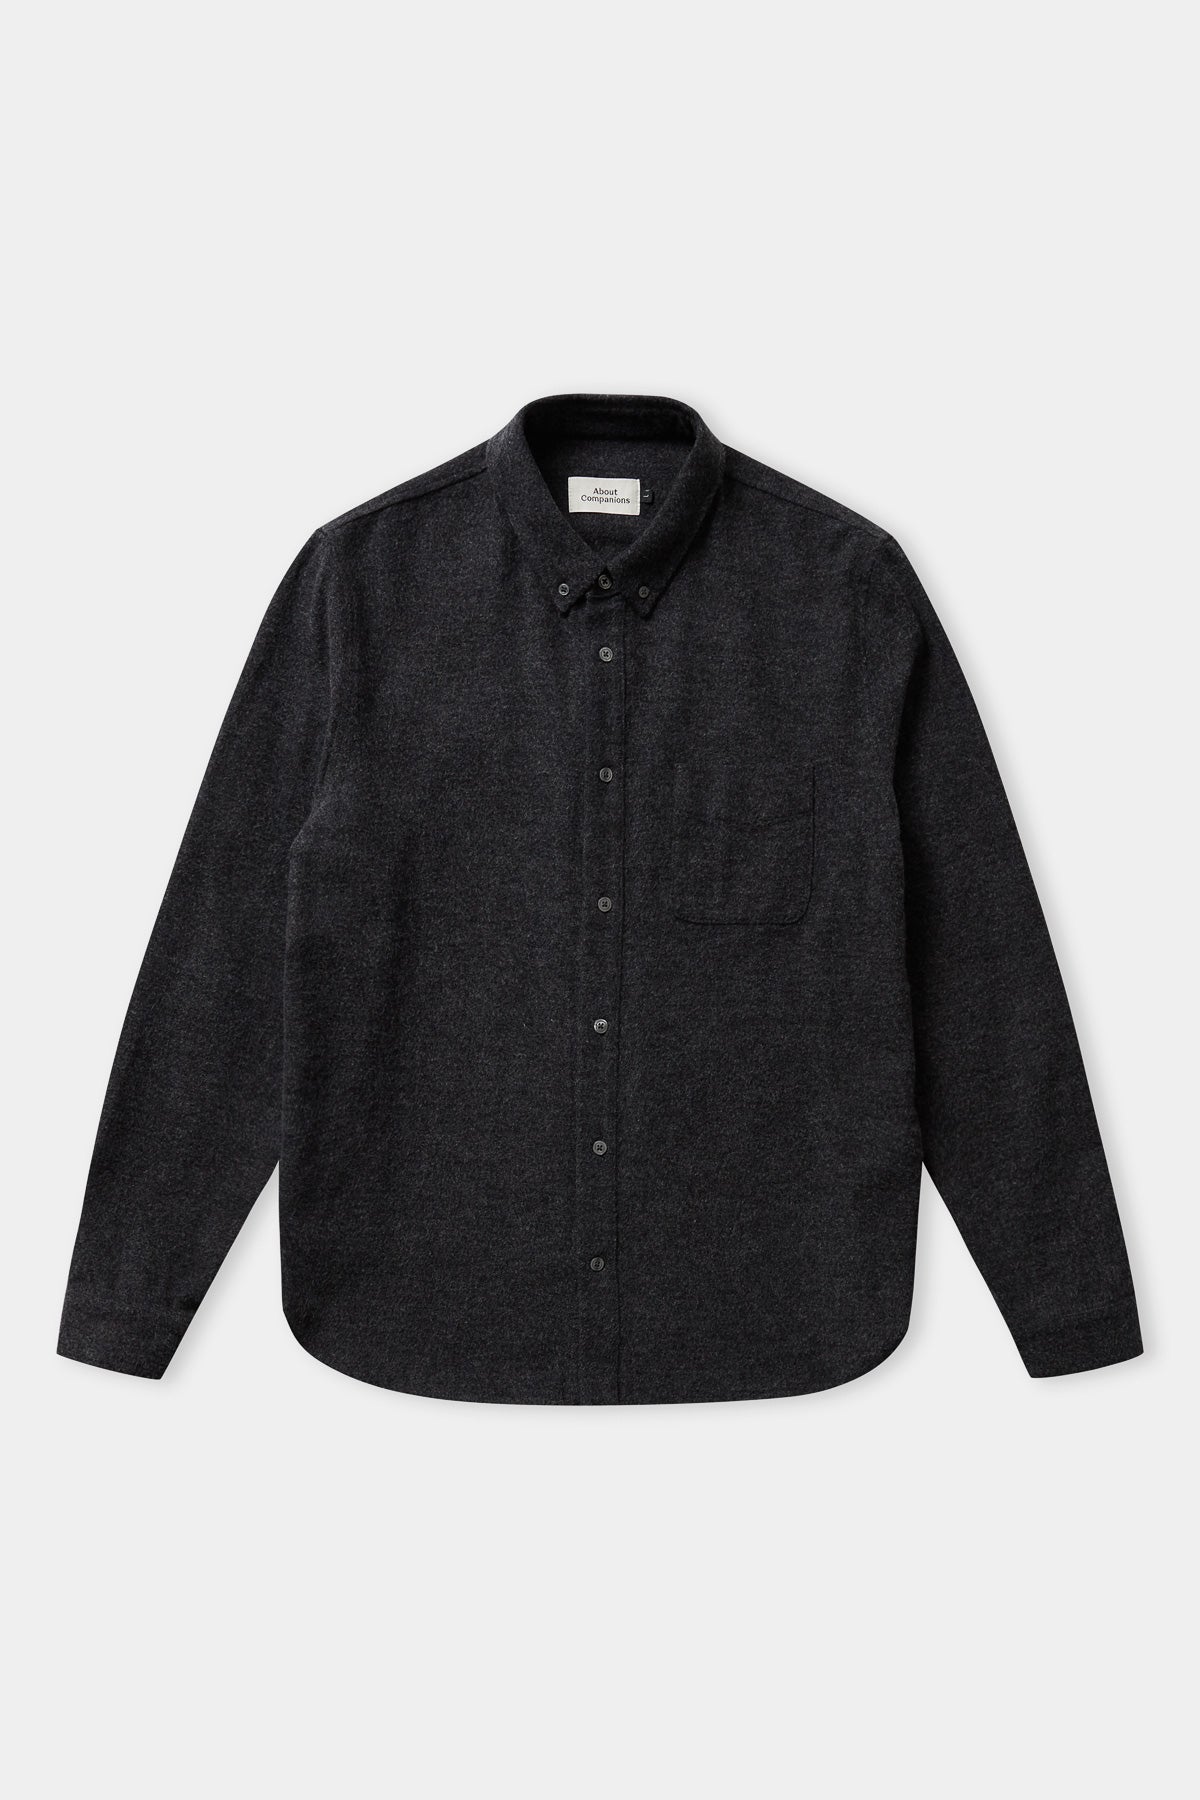 About Companions - KEN shirt  eco coal flannel